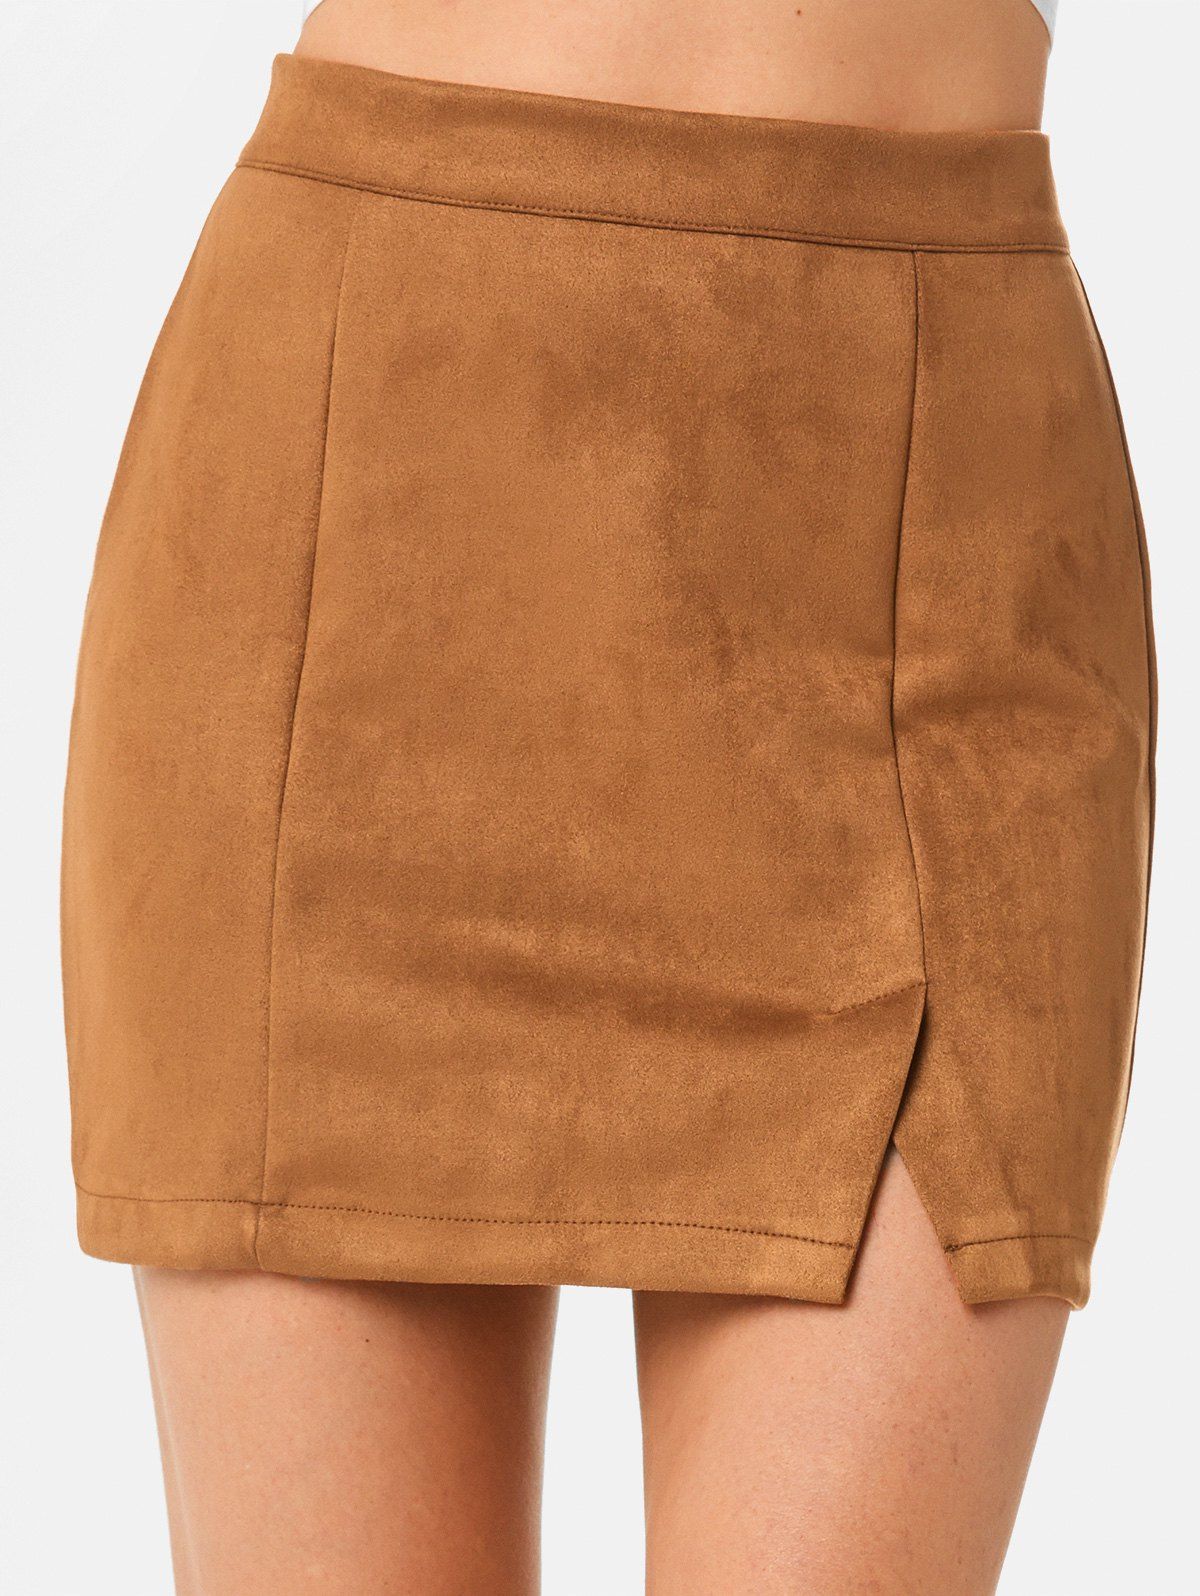 Faux Suede Slit Mini Skirt - COFFEE XL